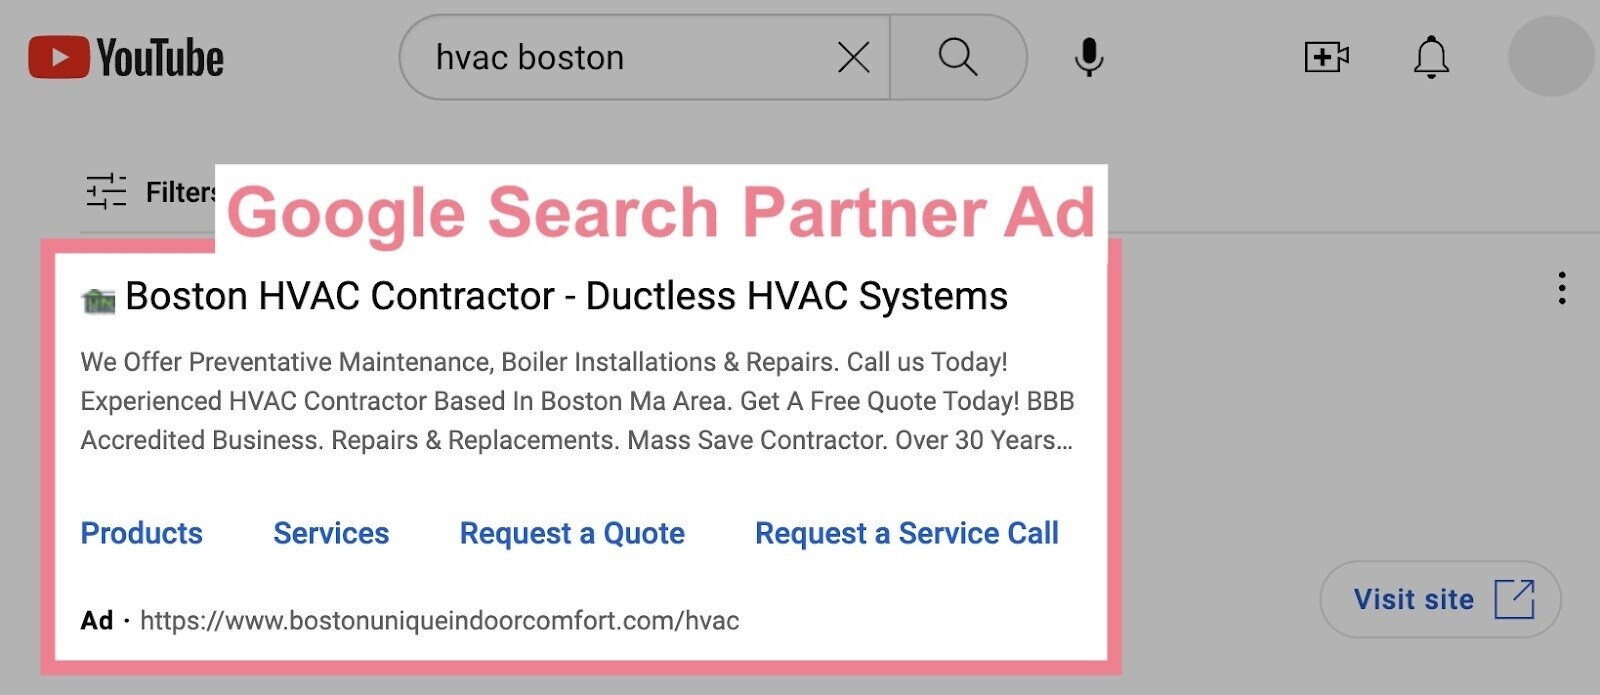 Google Search Partner Ad